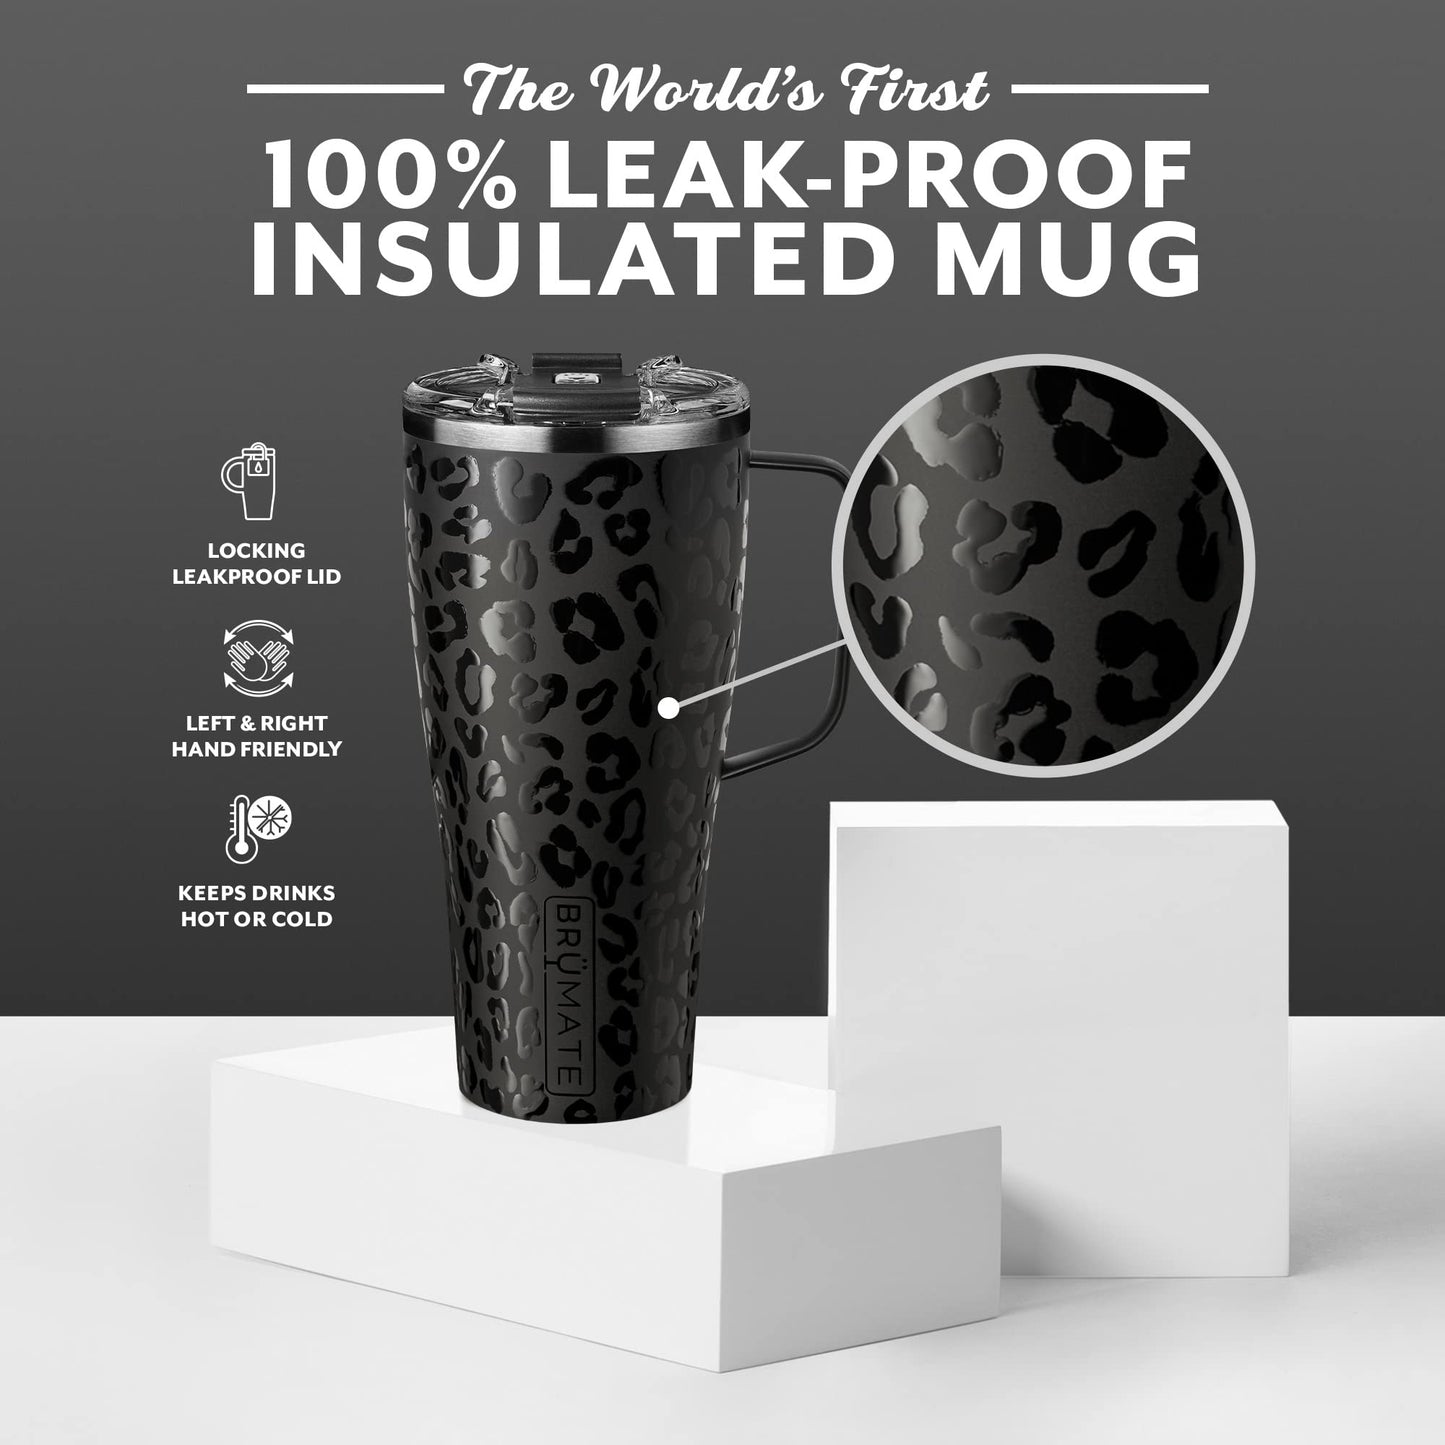 BrüMate Toddy XL - 32oz 100% Leak Proof Insulated Coffee Mug